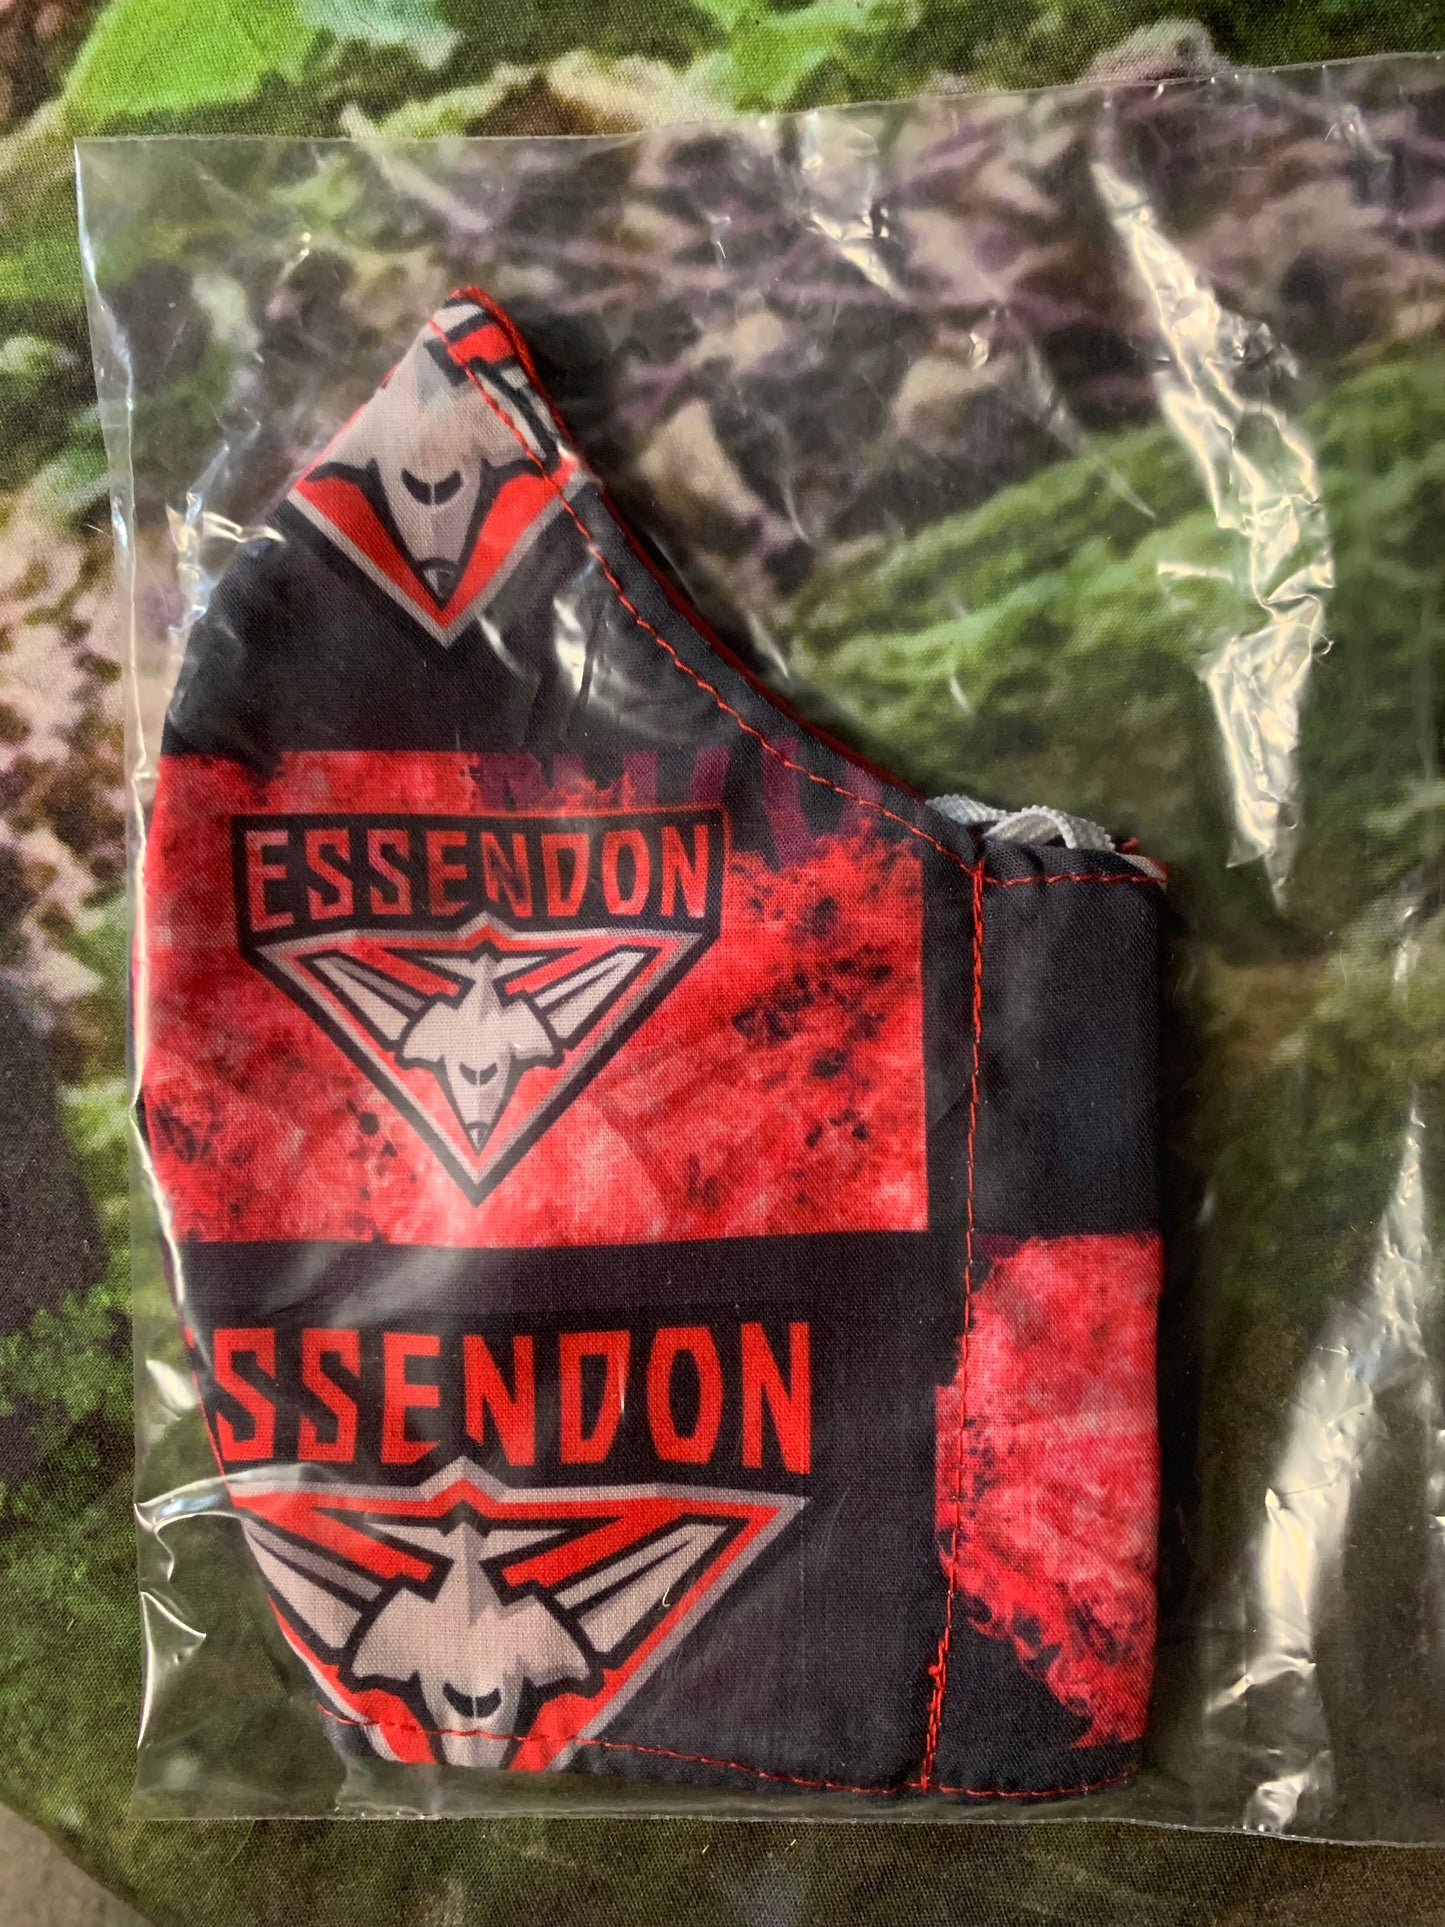 Essendon